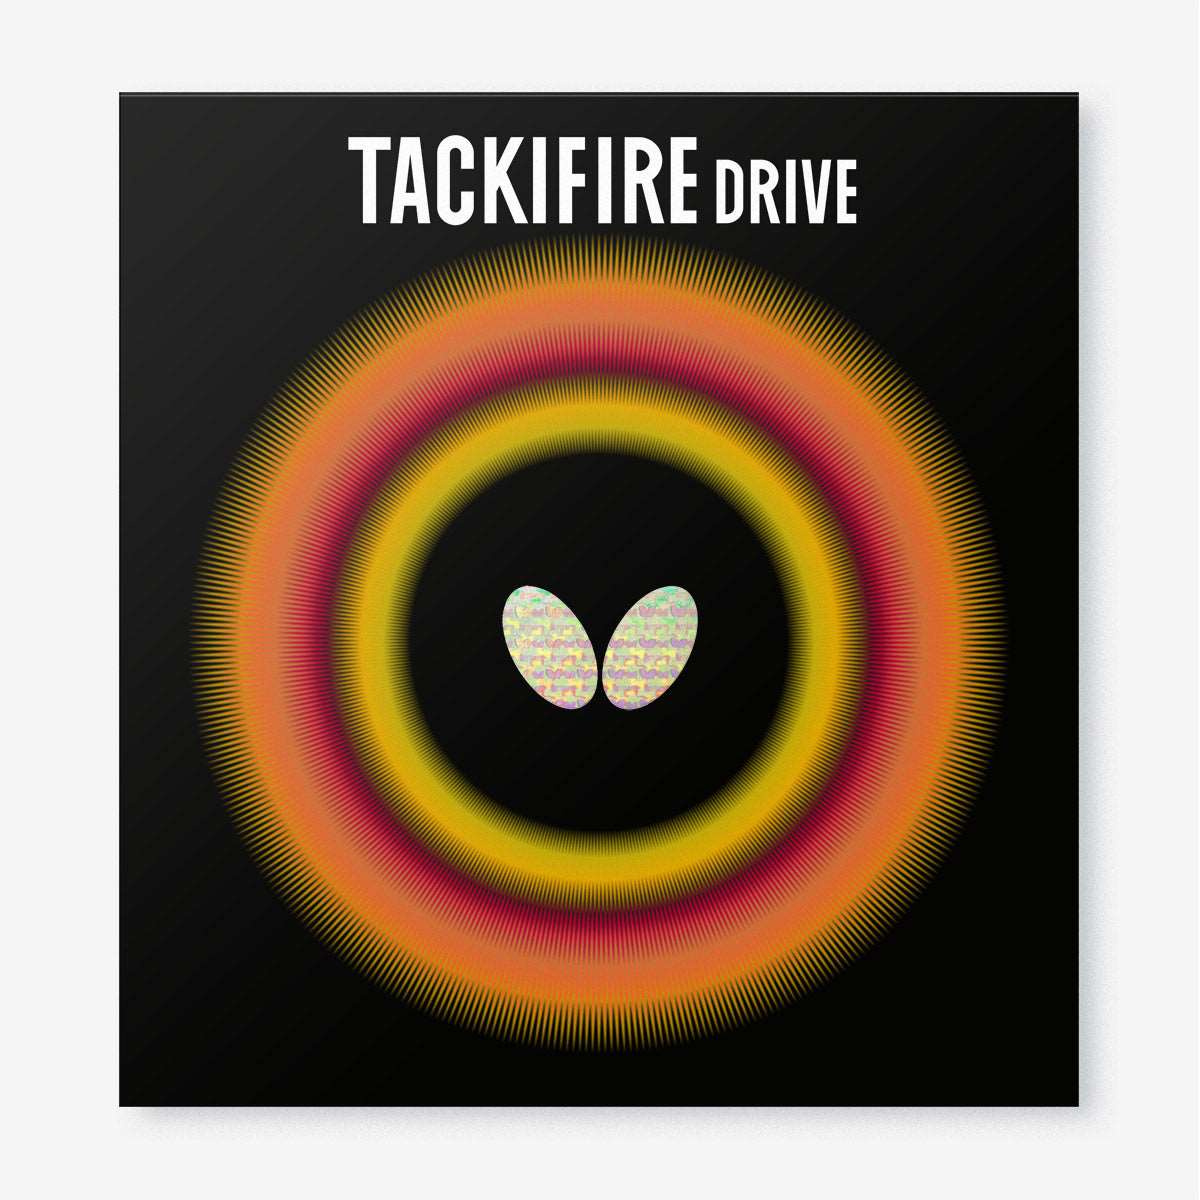 Tackifire Drive